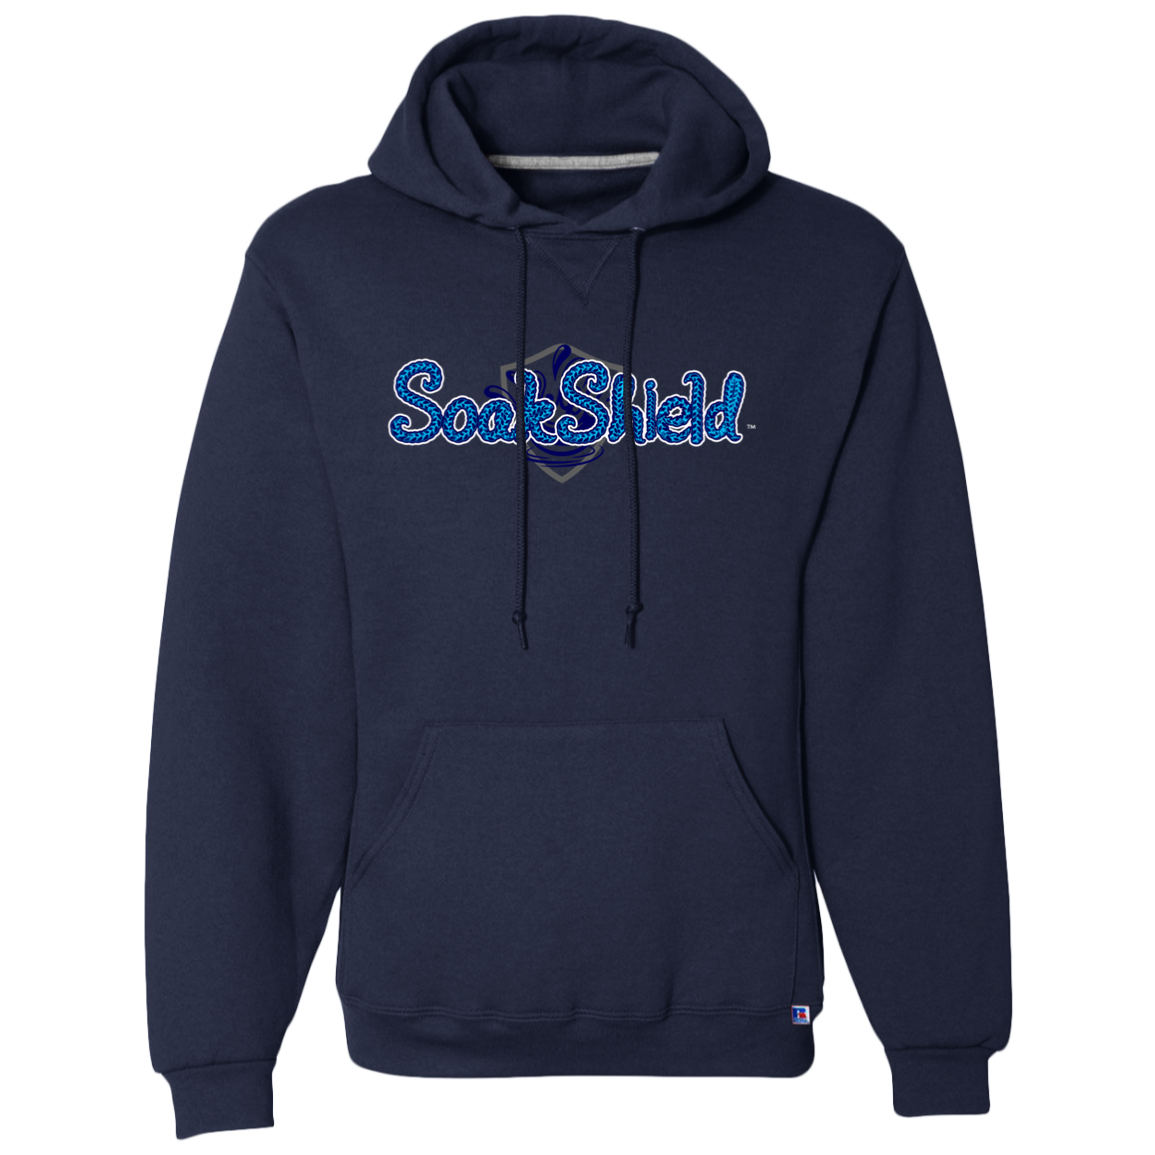 SoakShield Logo 695HBM Dri-Power Fleece Pullover Hoodie